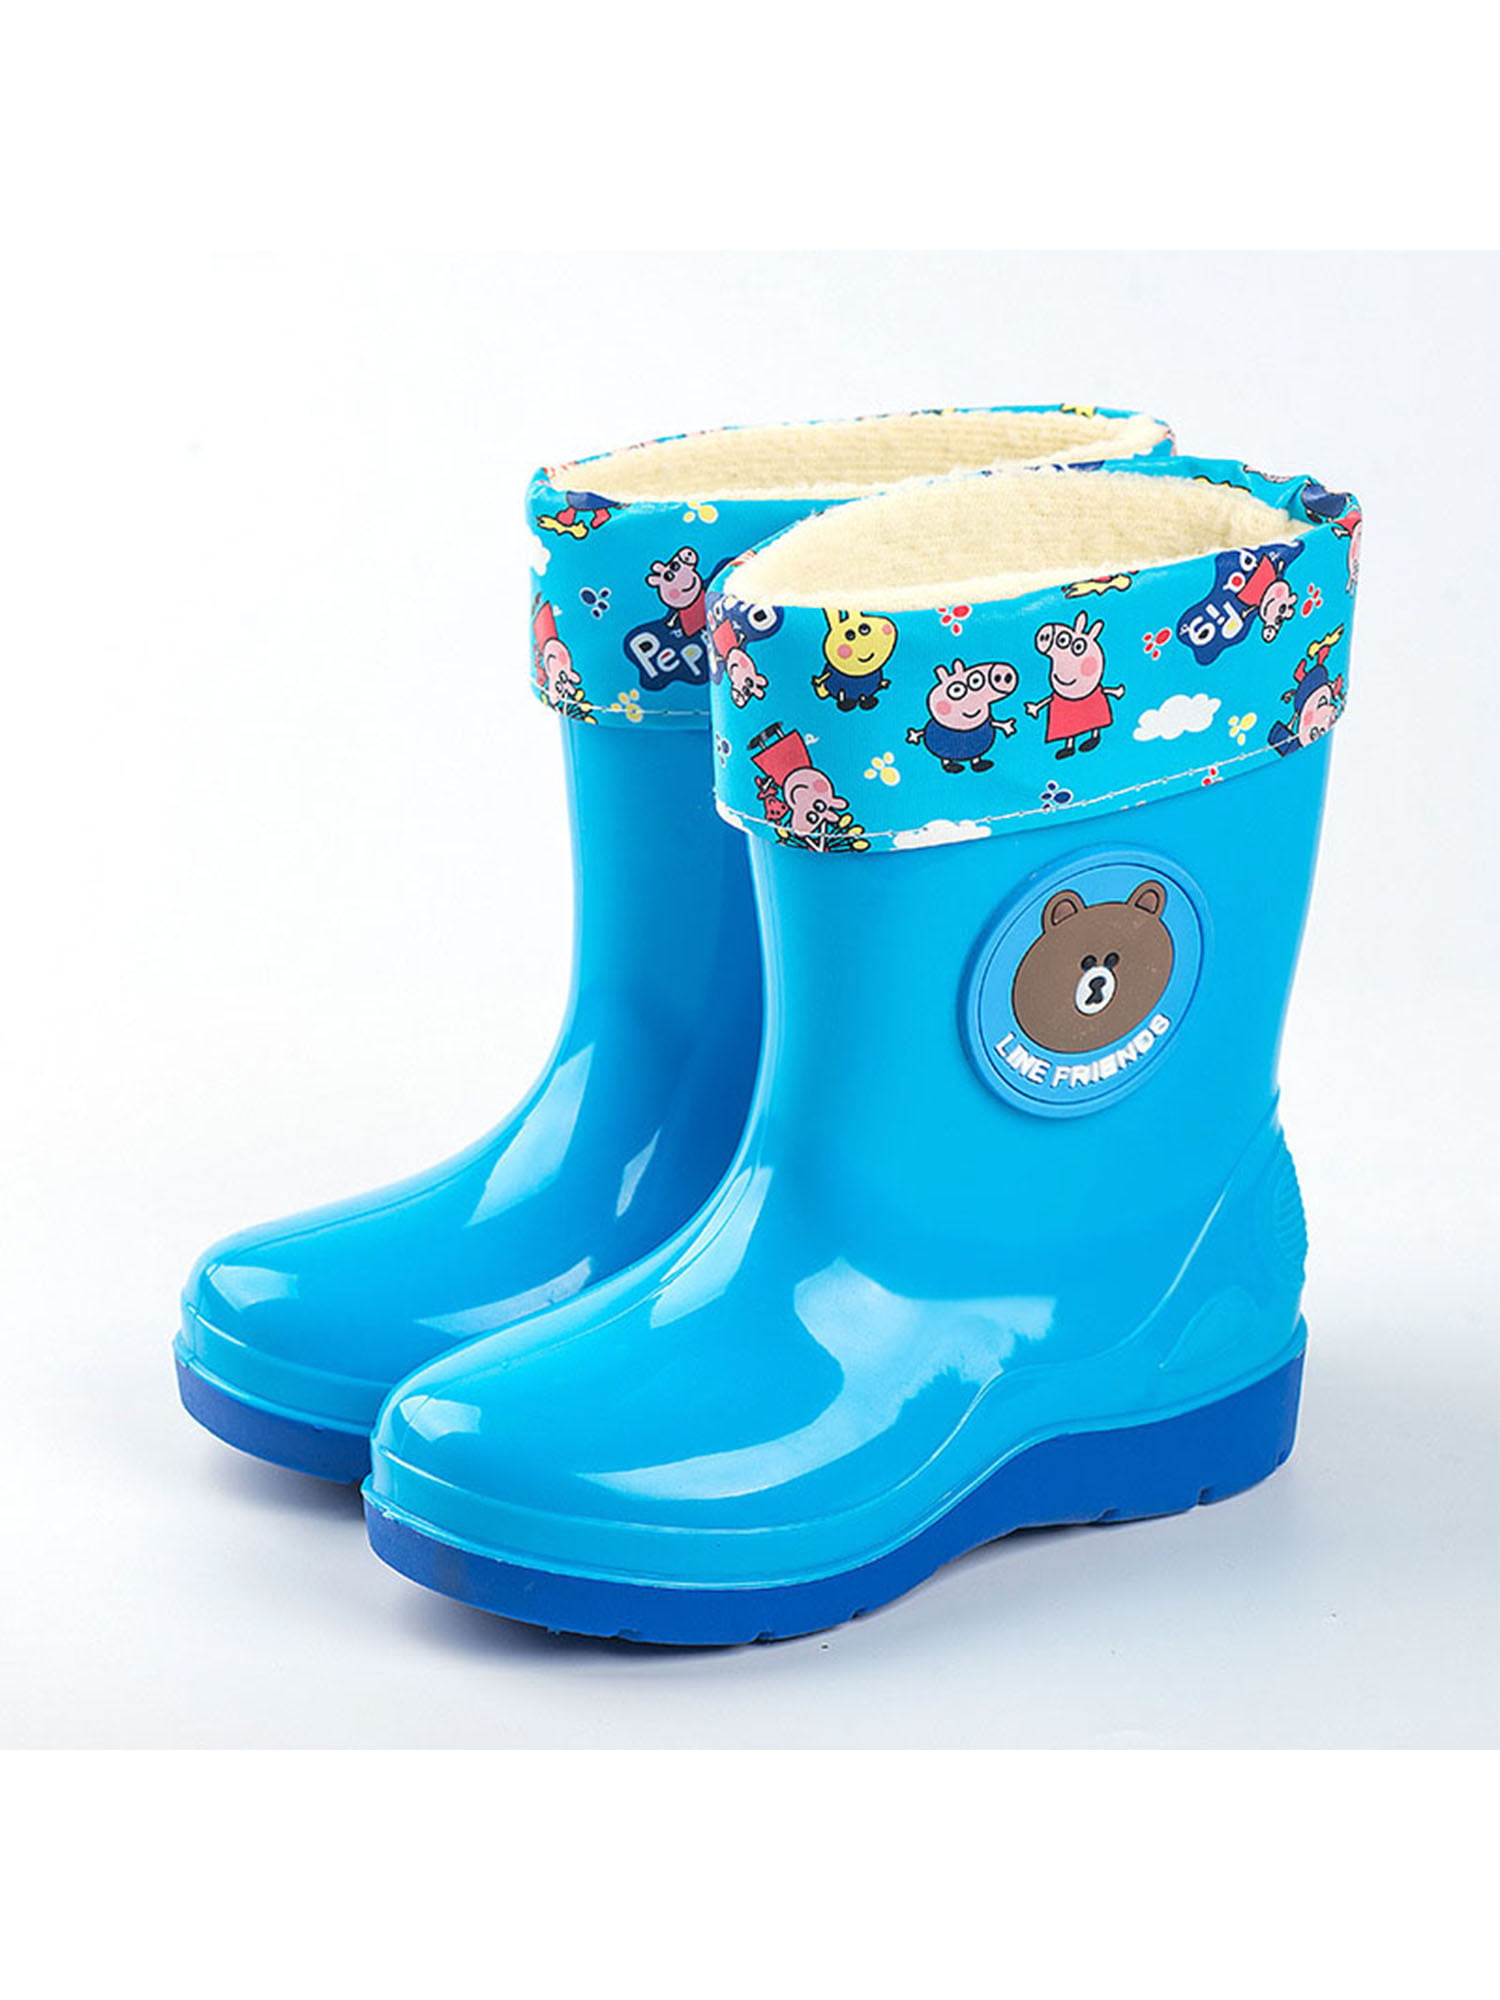 Details about  / Women/'s Mens Anti Slip Mid Calf Lined Waterproof  Rain Boot Garden Work Shoes